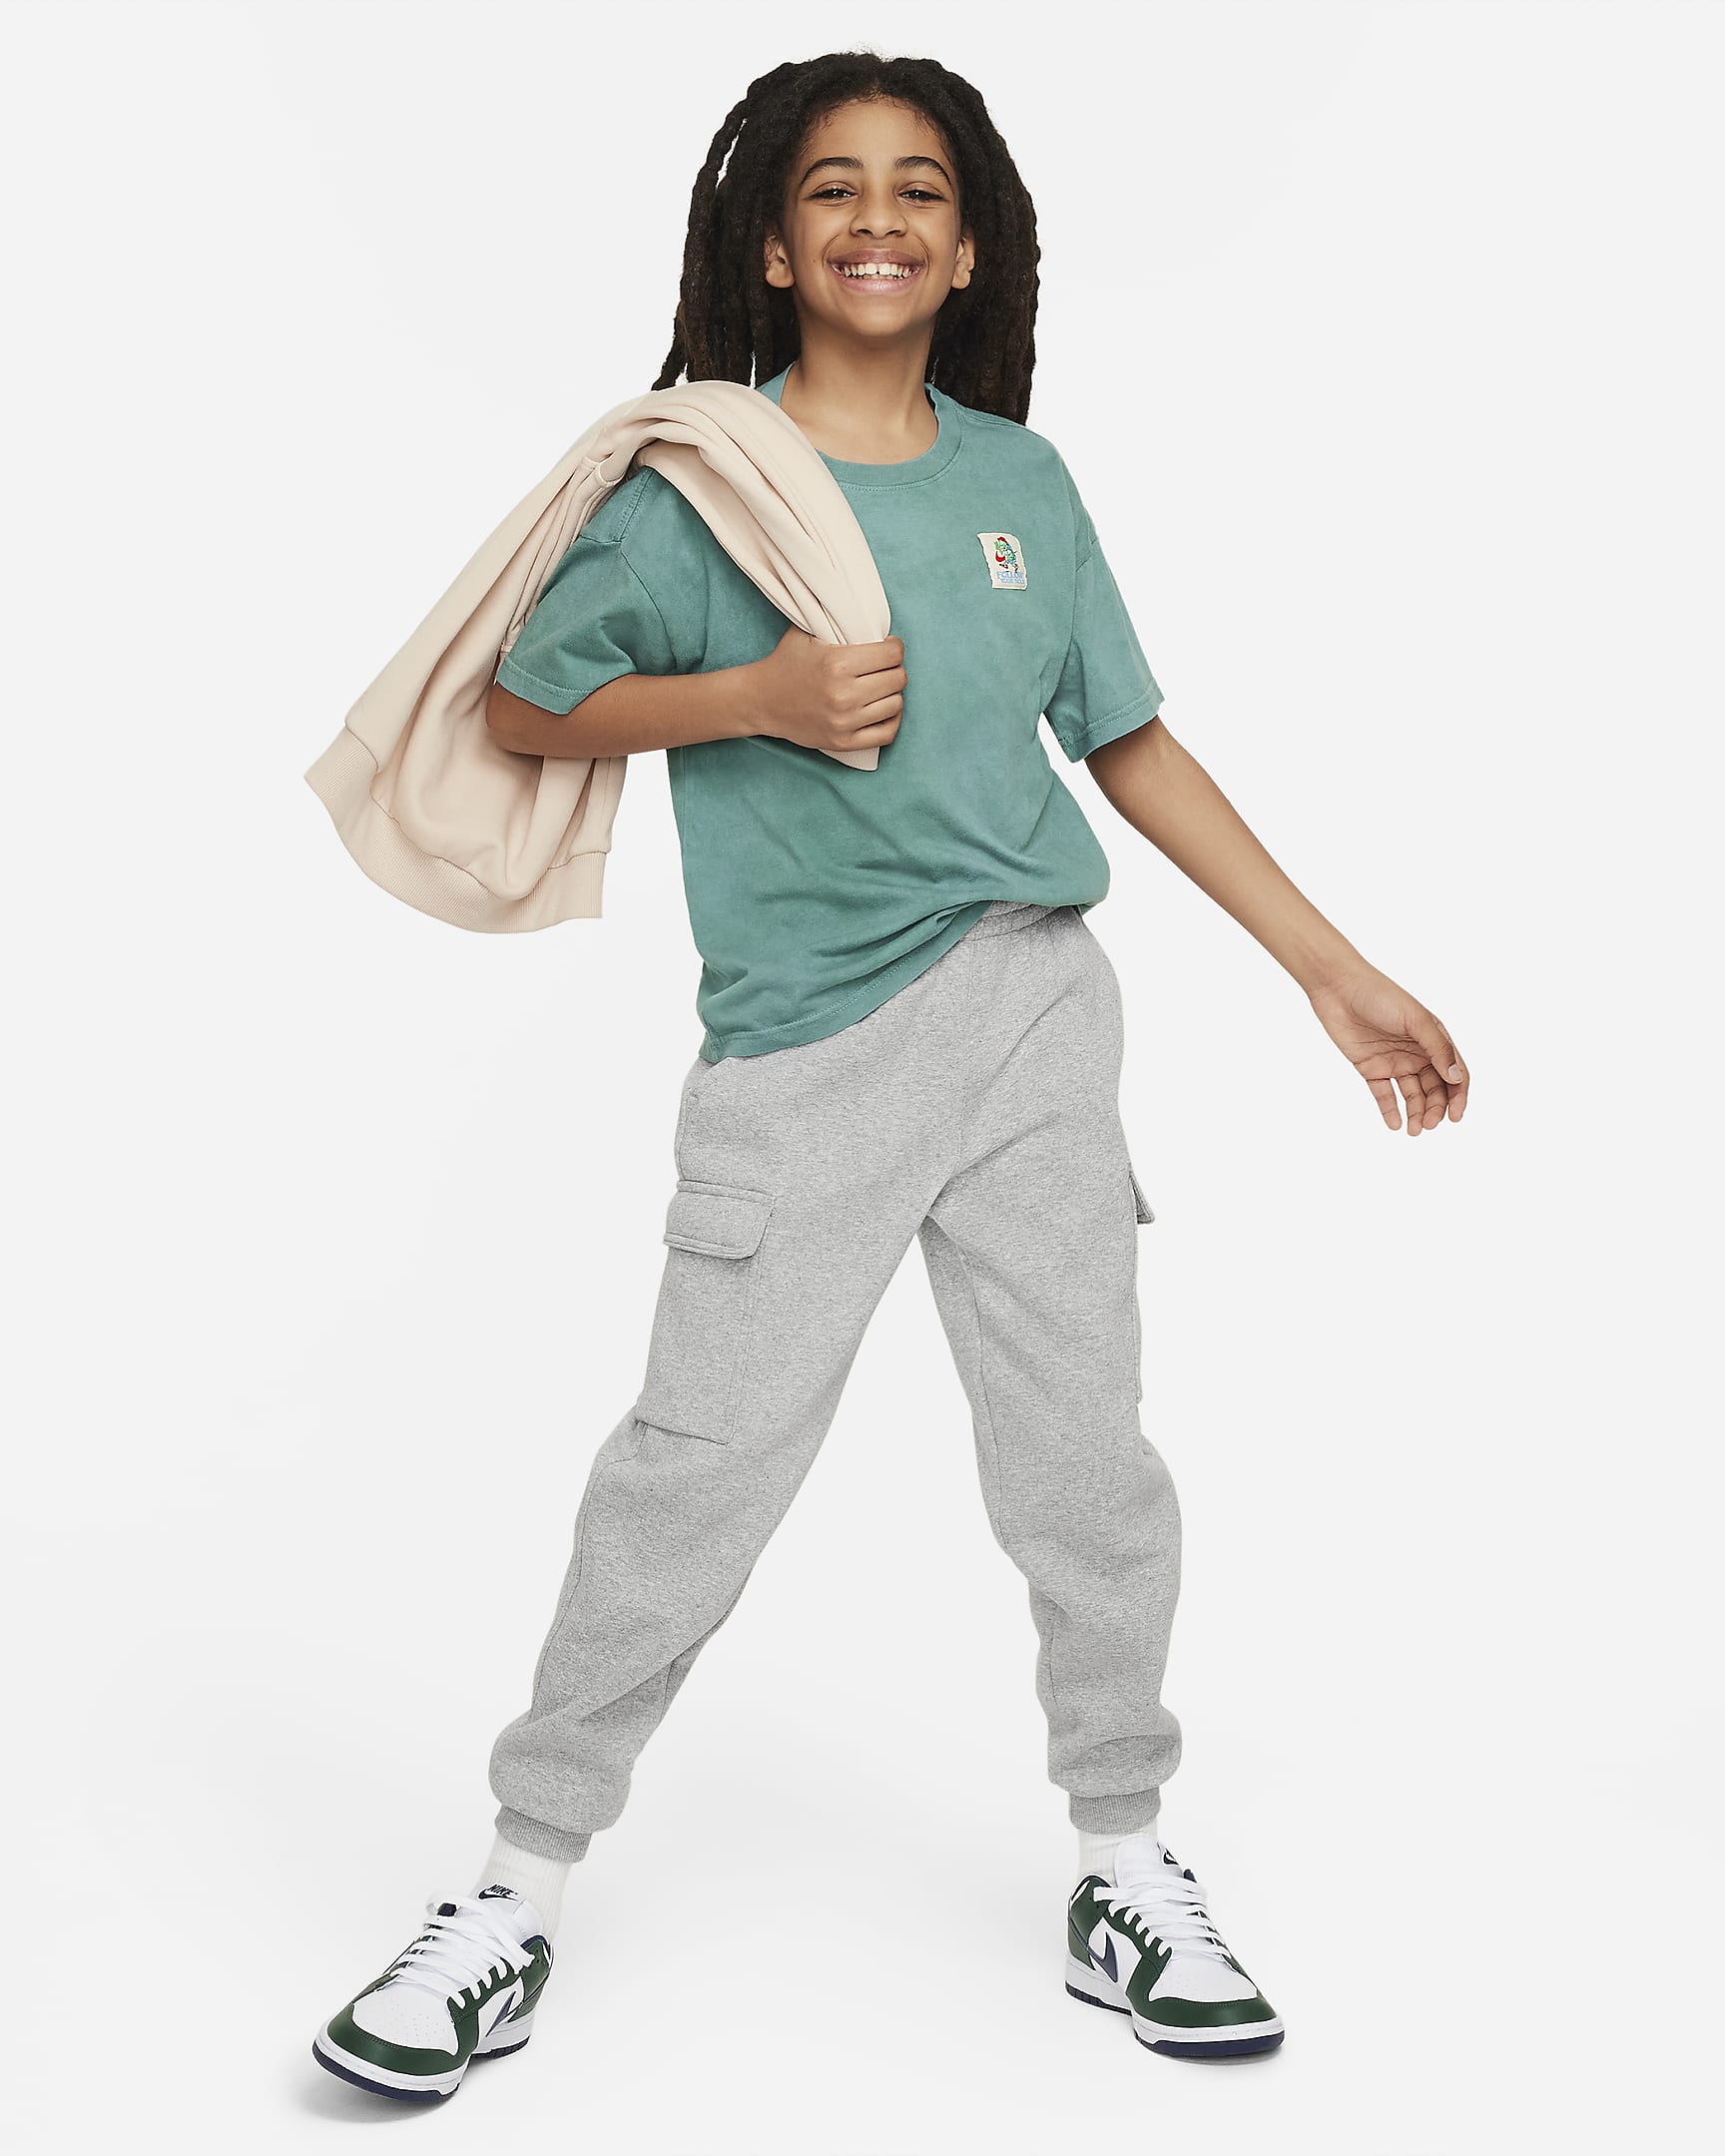 Nike Sportswear Older Kids' T-Shirt - Bicoastal